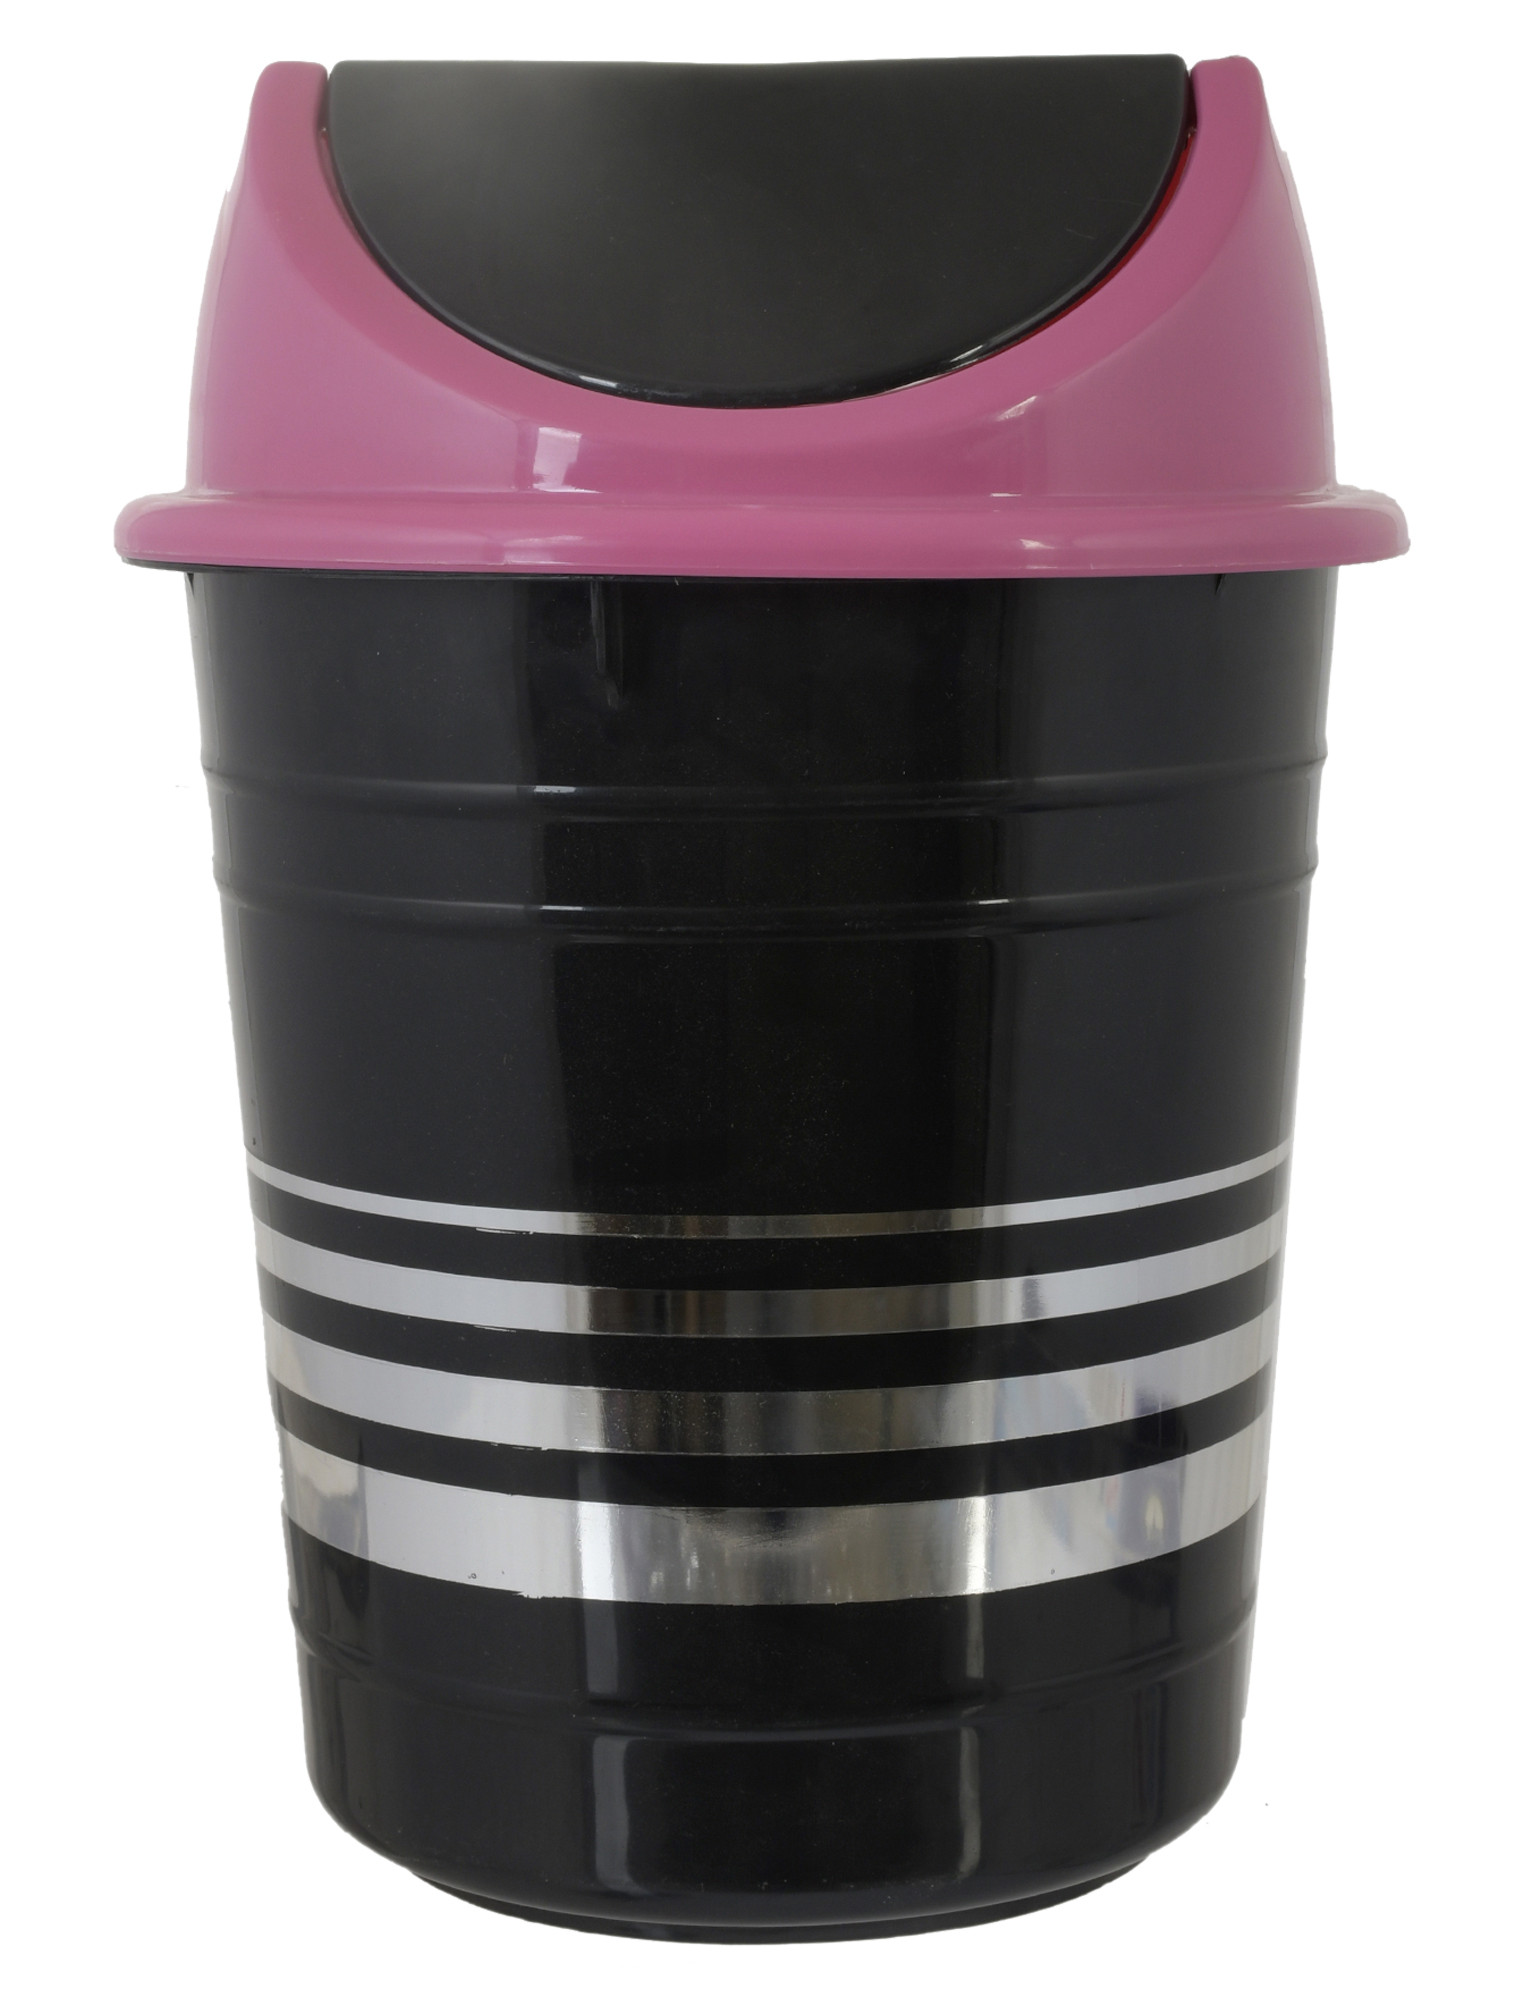 Kuber Industries Plastic 2 Pieces Medium Size Swing Dustbin/ Swing Garbage Bin/ Waste Bin, 10 Liters (Pink & Yellow)